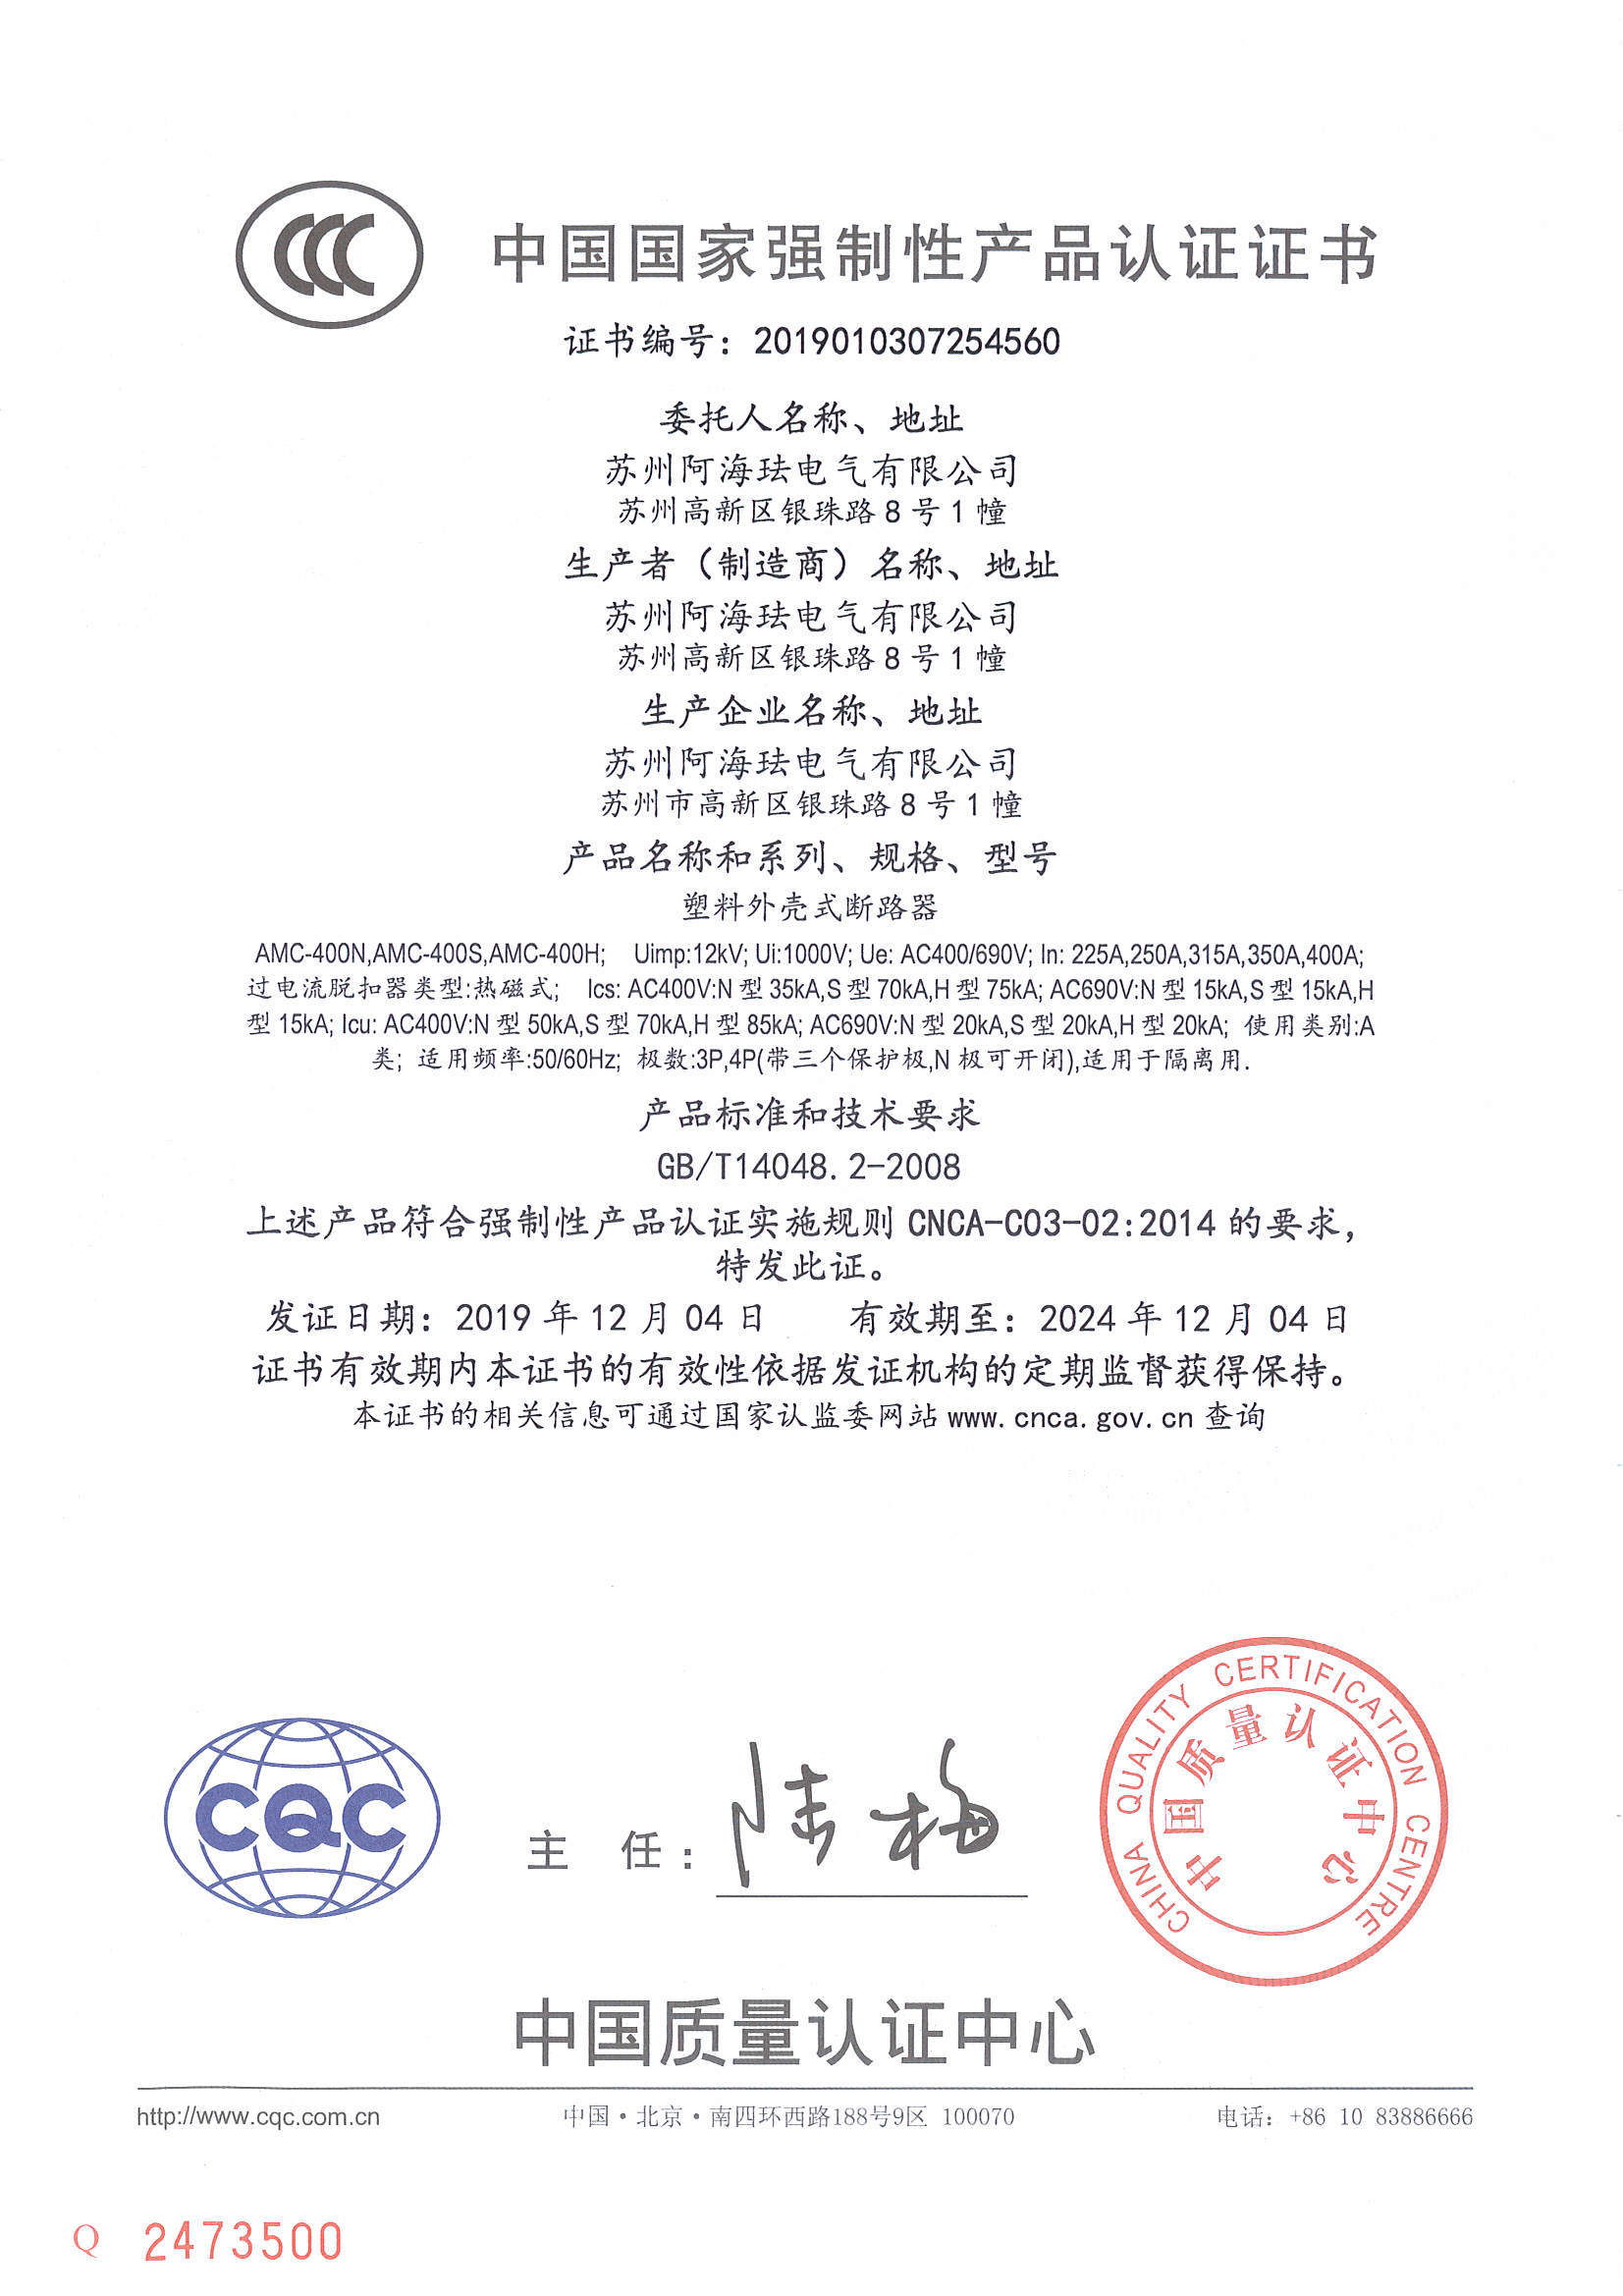 AMC400 CCC Certificate